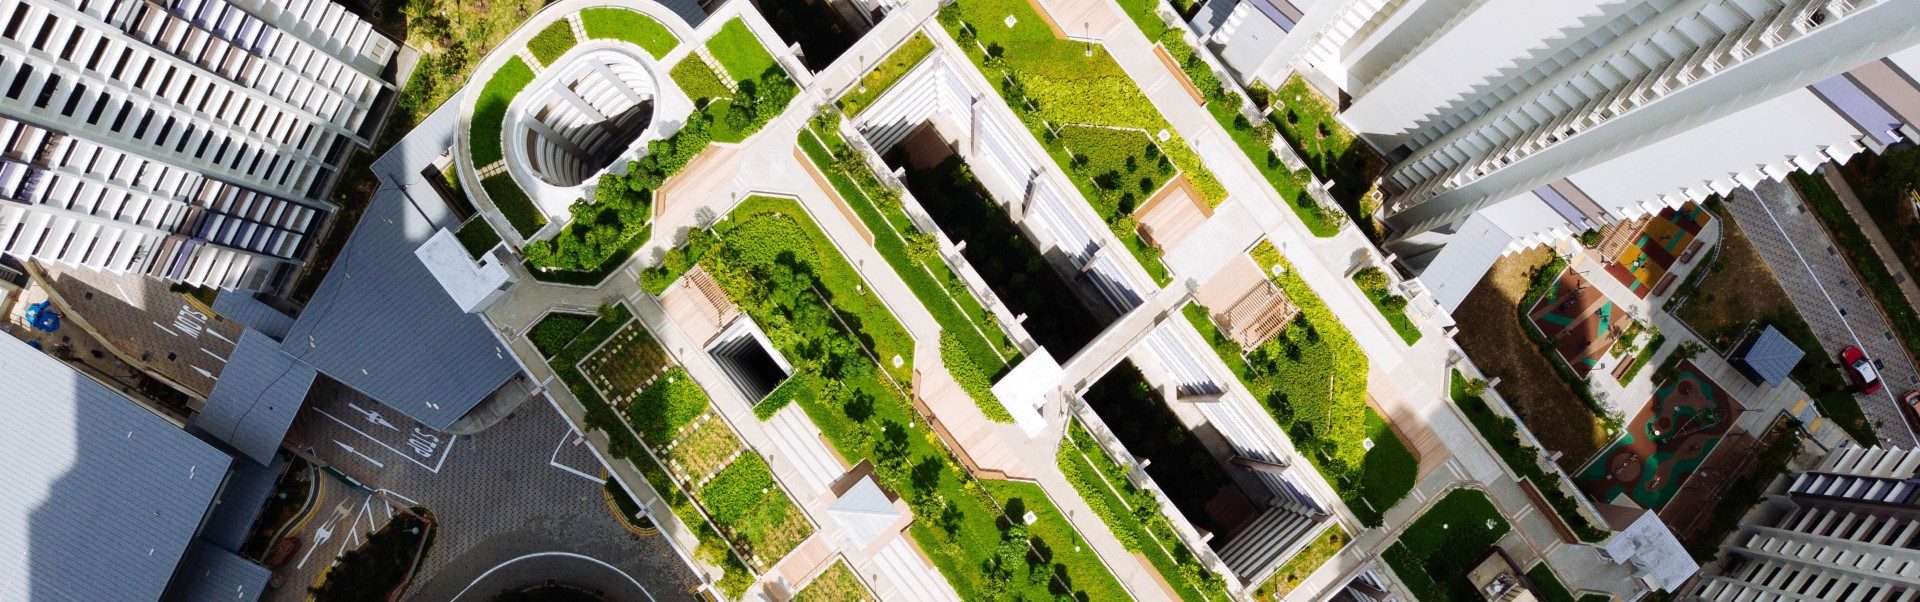 Urban Green Building